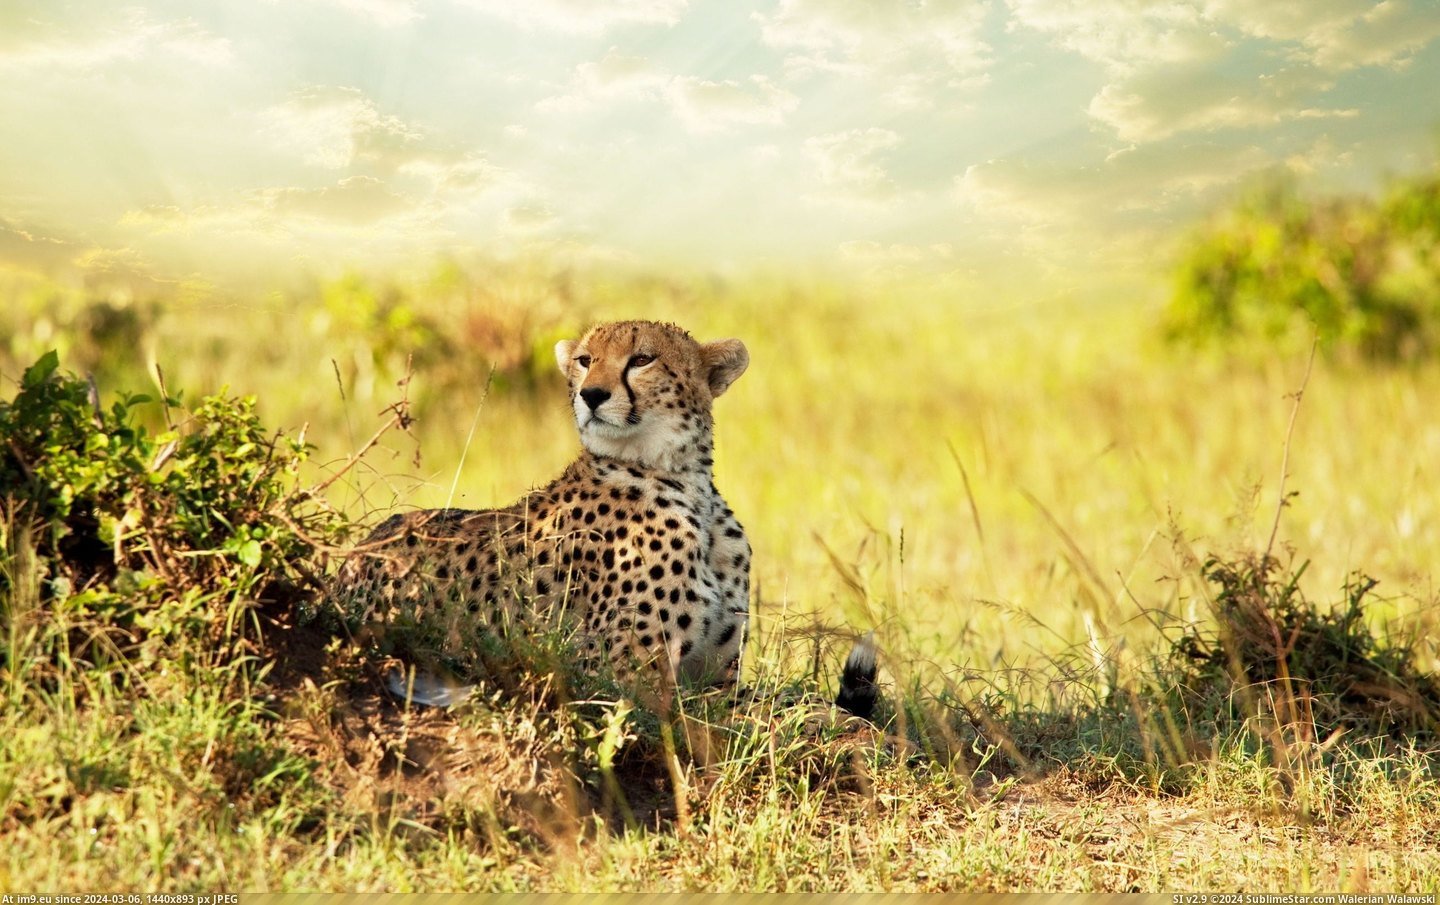 #Wallpaper #Wide #Savanna #Africa #Cheetah Cheetah Savanna Africa Wide HD Wallpaper Pic. (Image of album Unique HD Wallpapers))